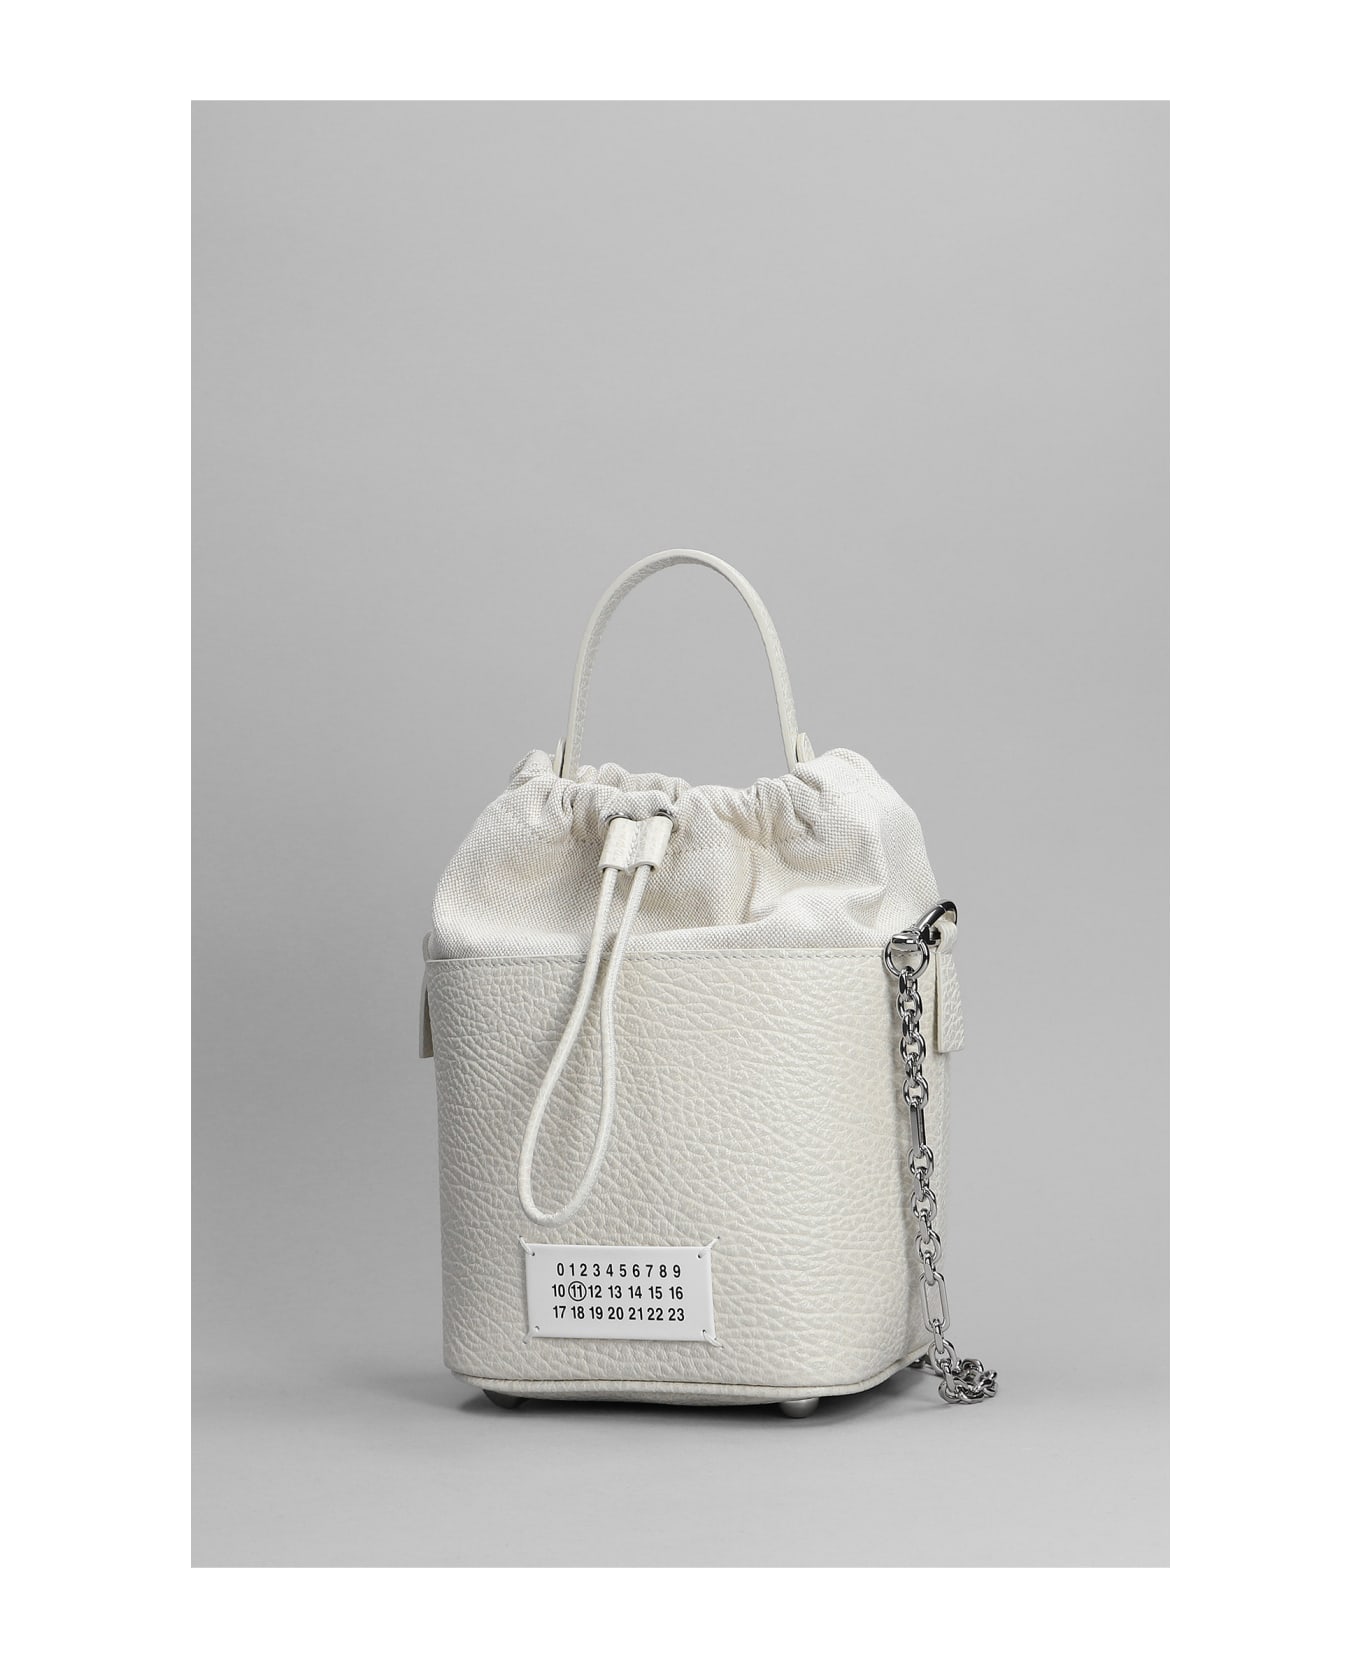 Maison Margiela Hand Bag In White Leather - WHITE